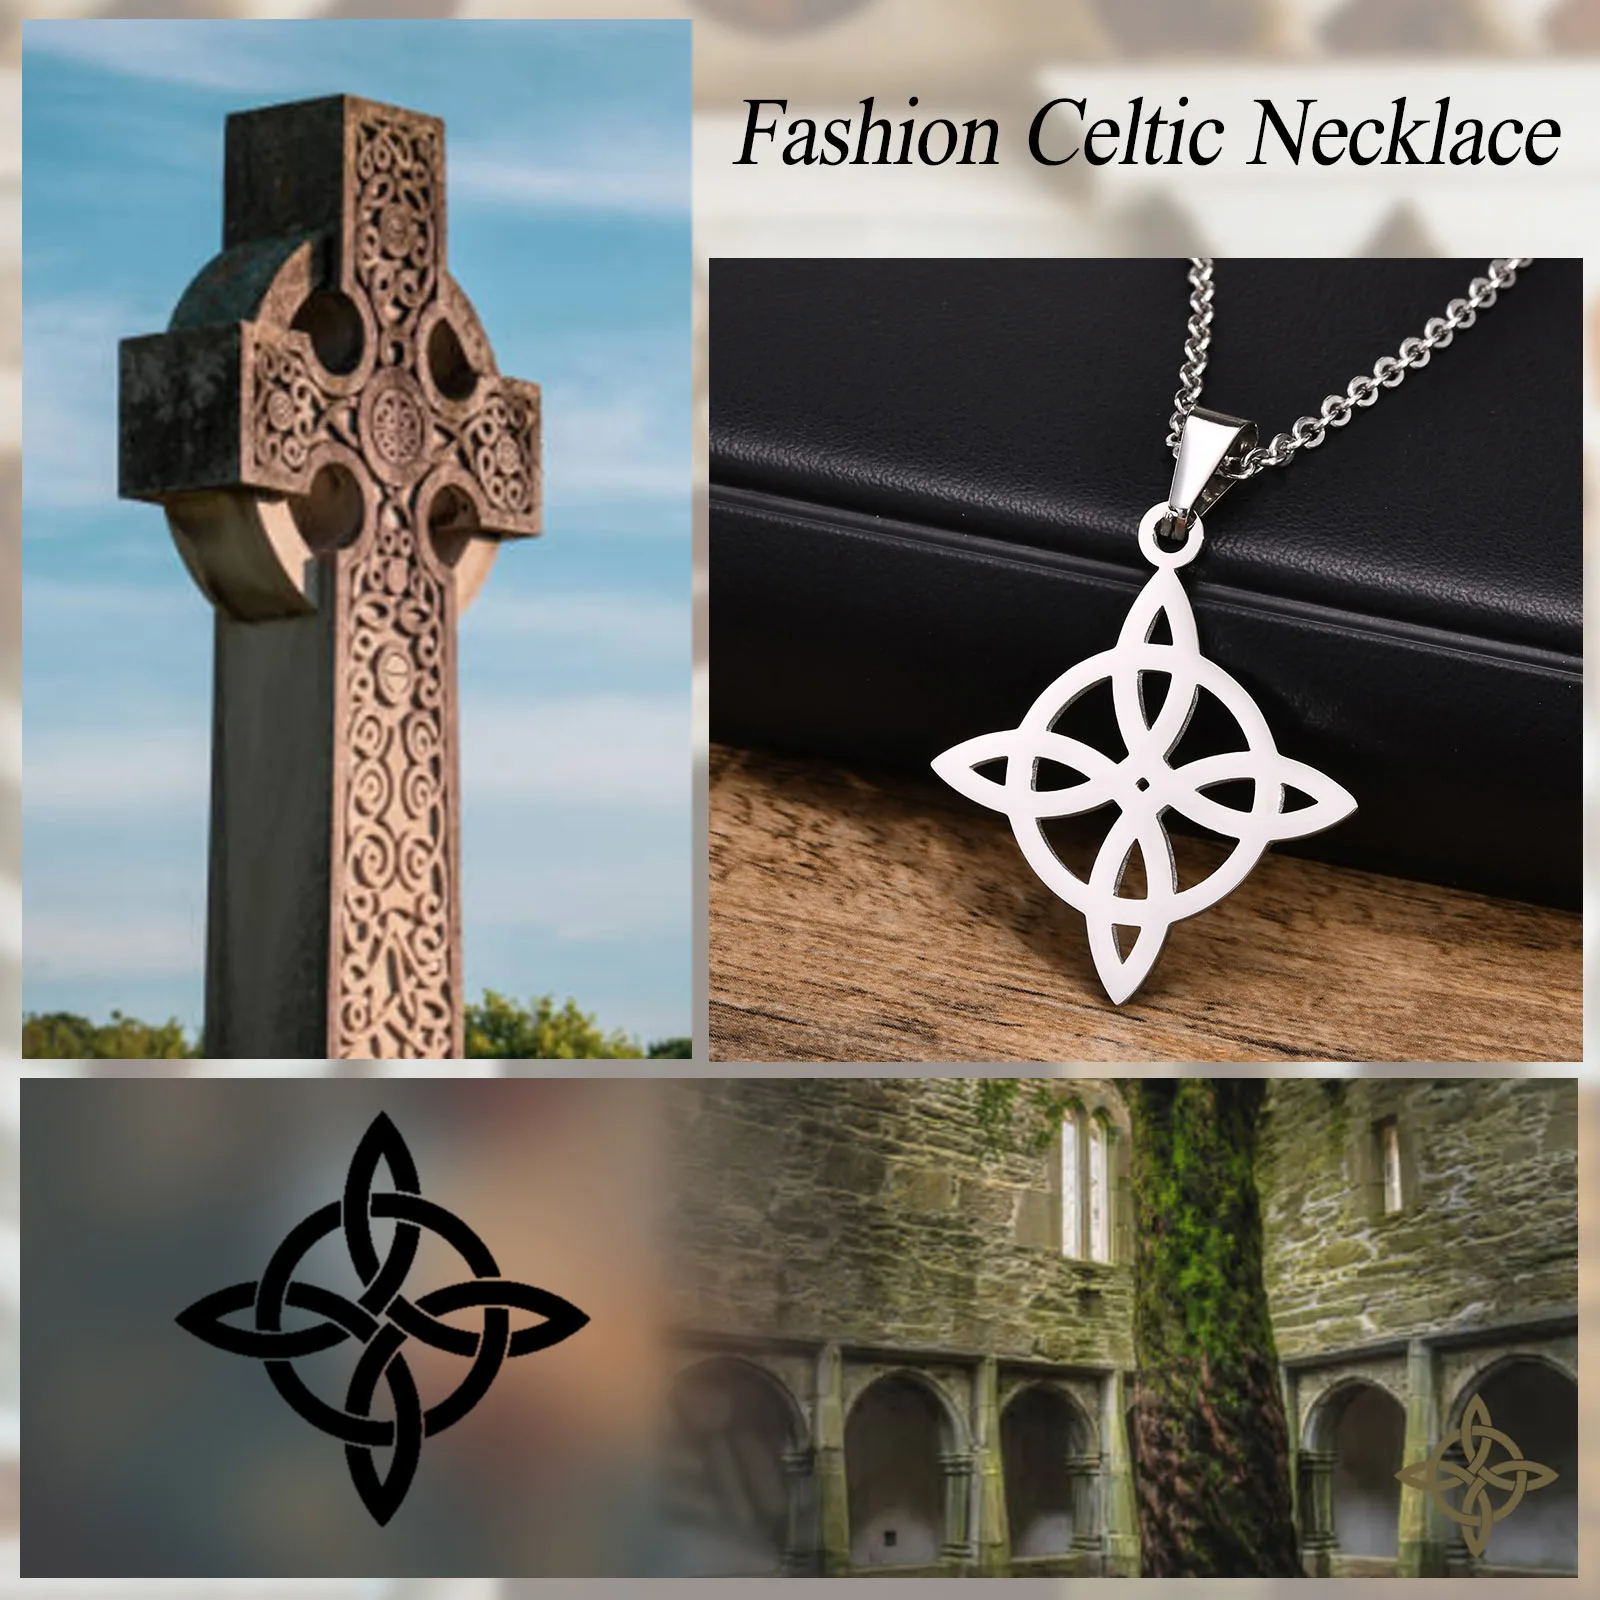 Vnox Witchcraft Witch's Кельтский Узел геометрические ожерелья для мужчин женщин